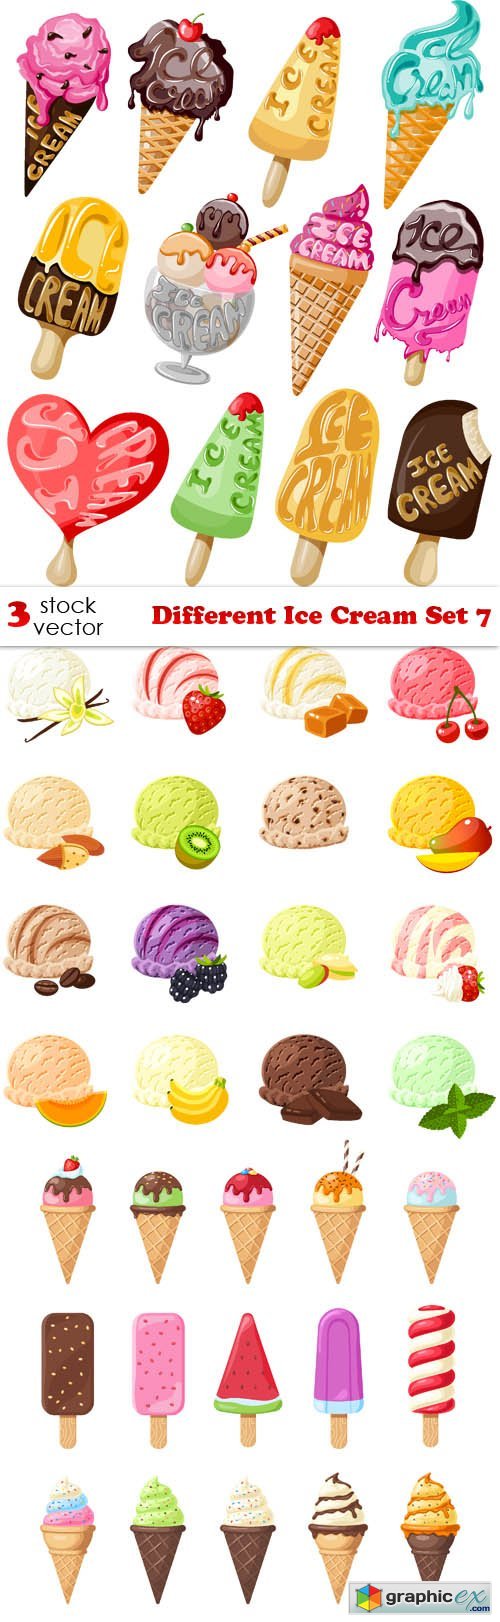 Different Ice Cream Set 7